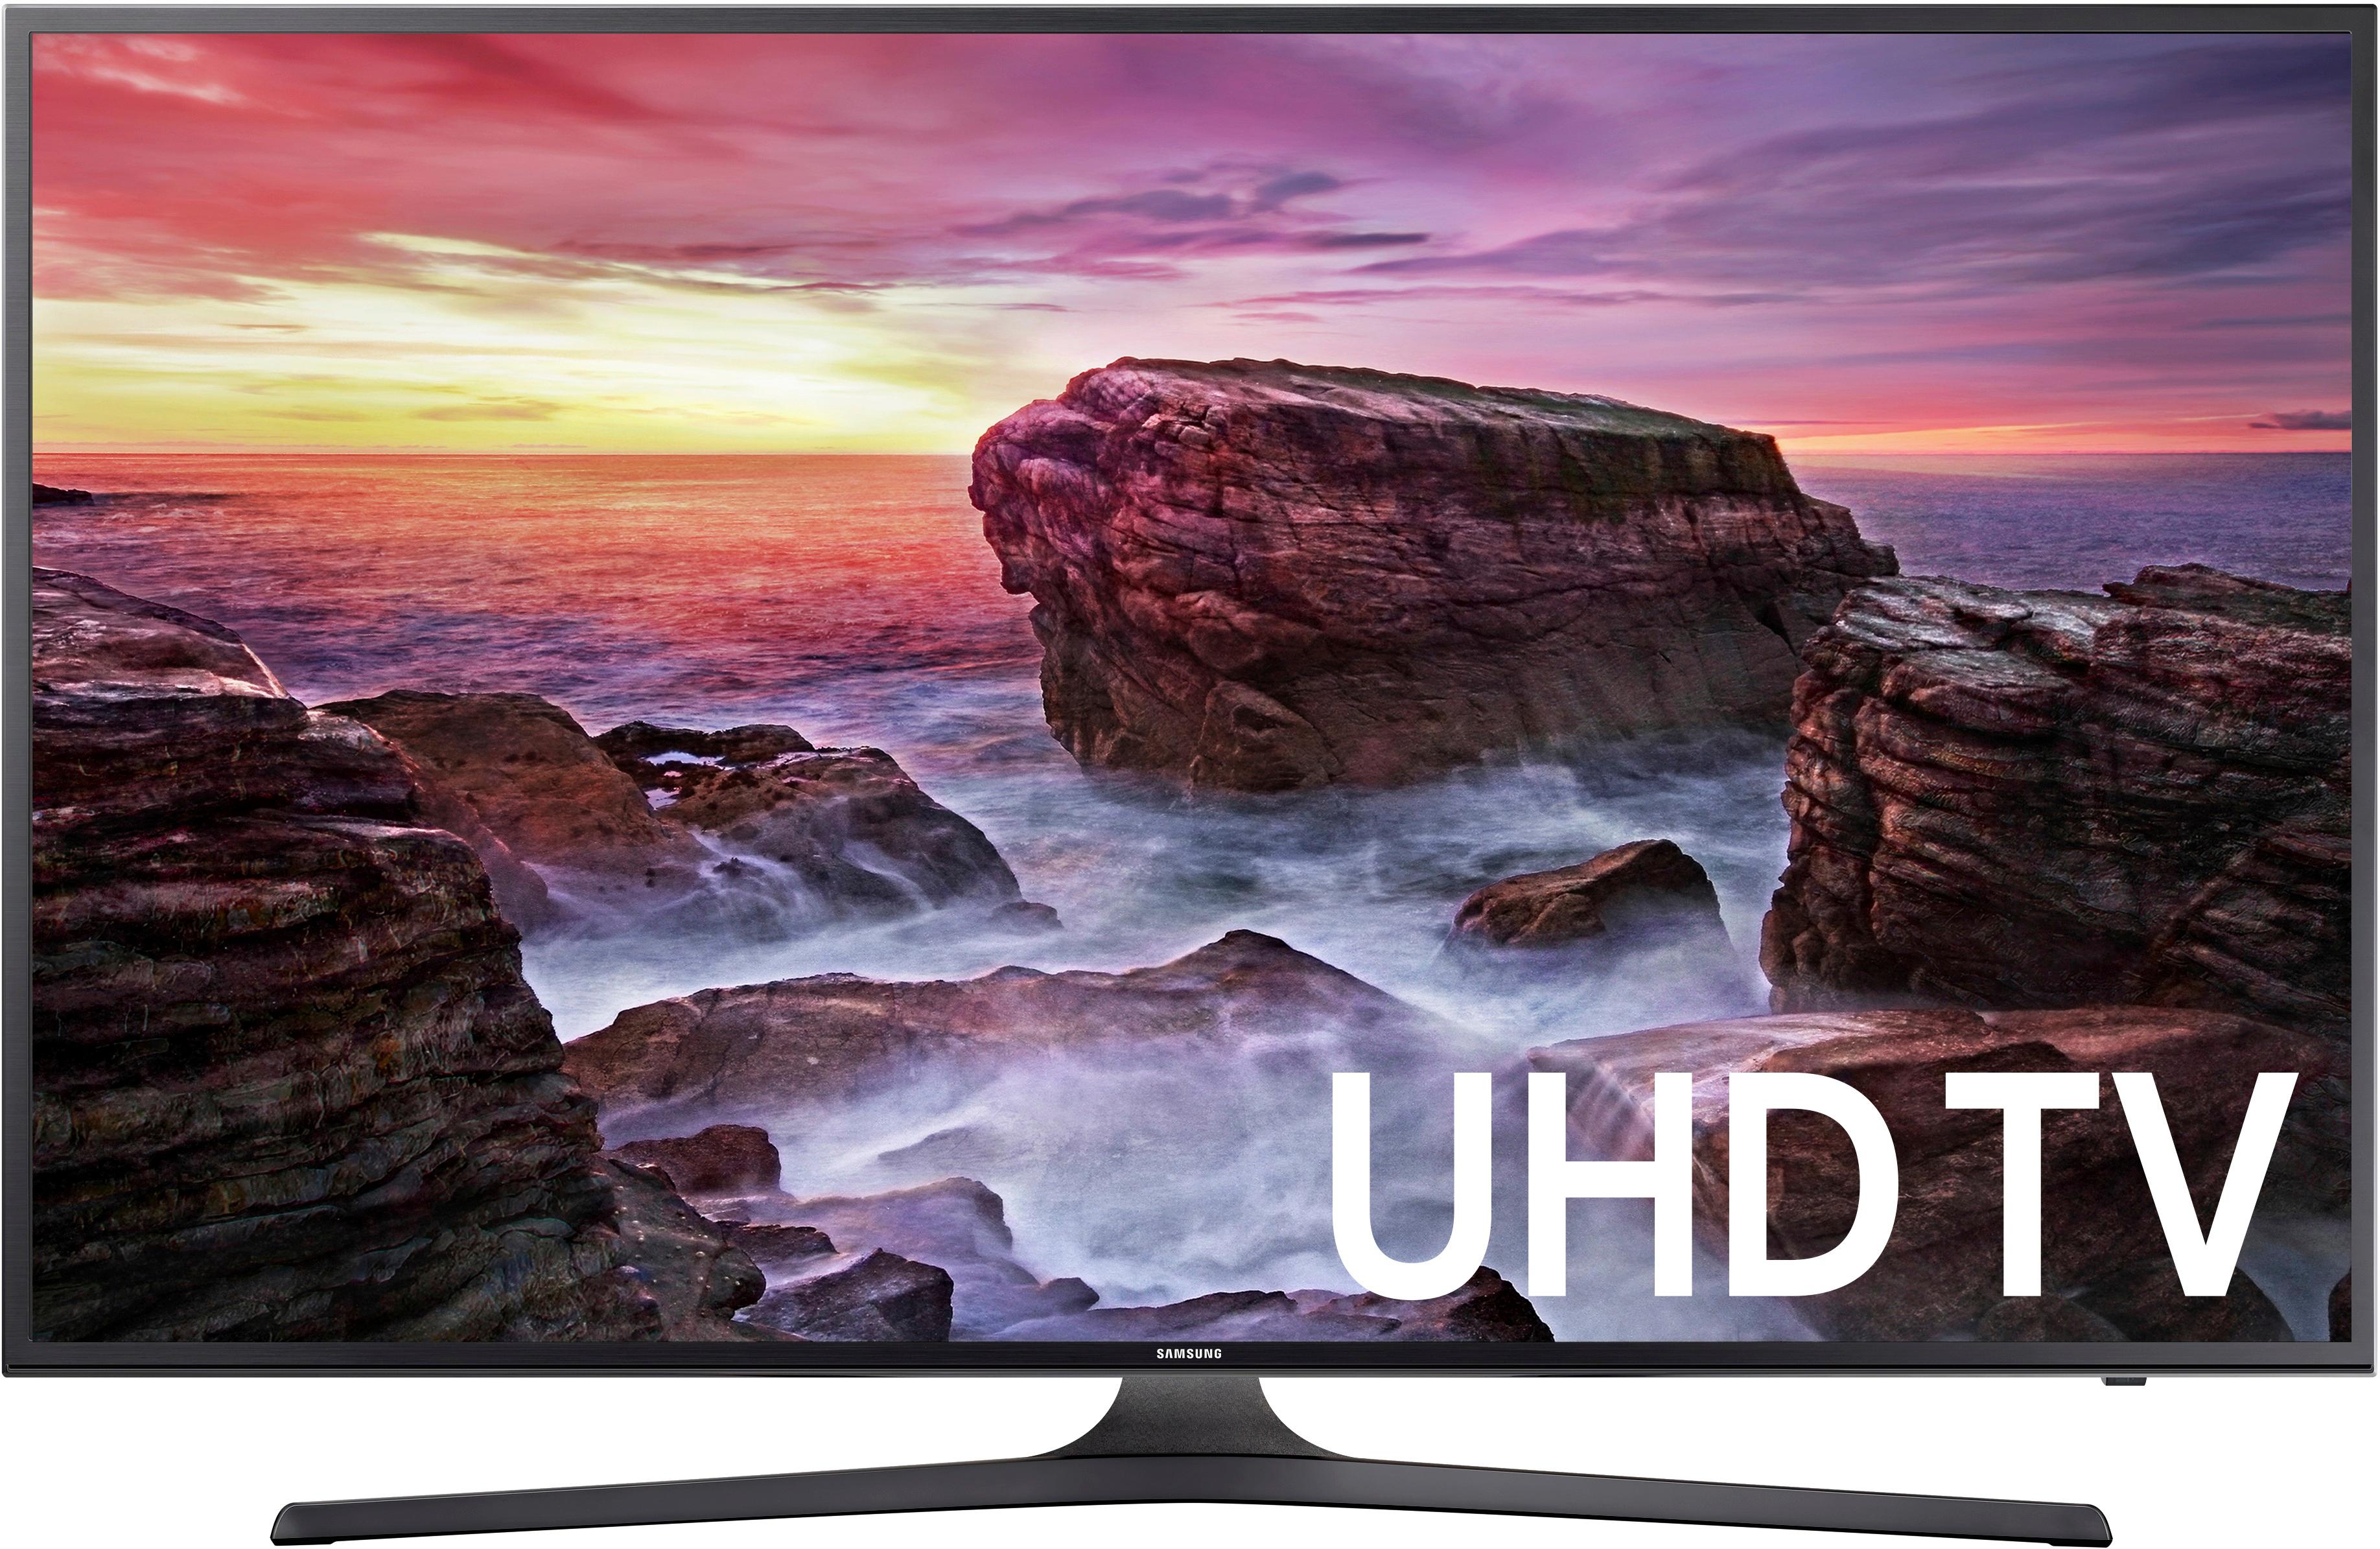 49" Class LED 2160p Smart 4K Ultra TV with HDR UN49MU6290FXZA - Best Buy